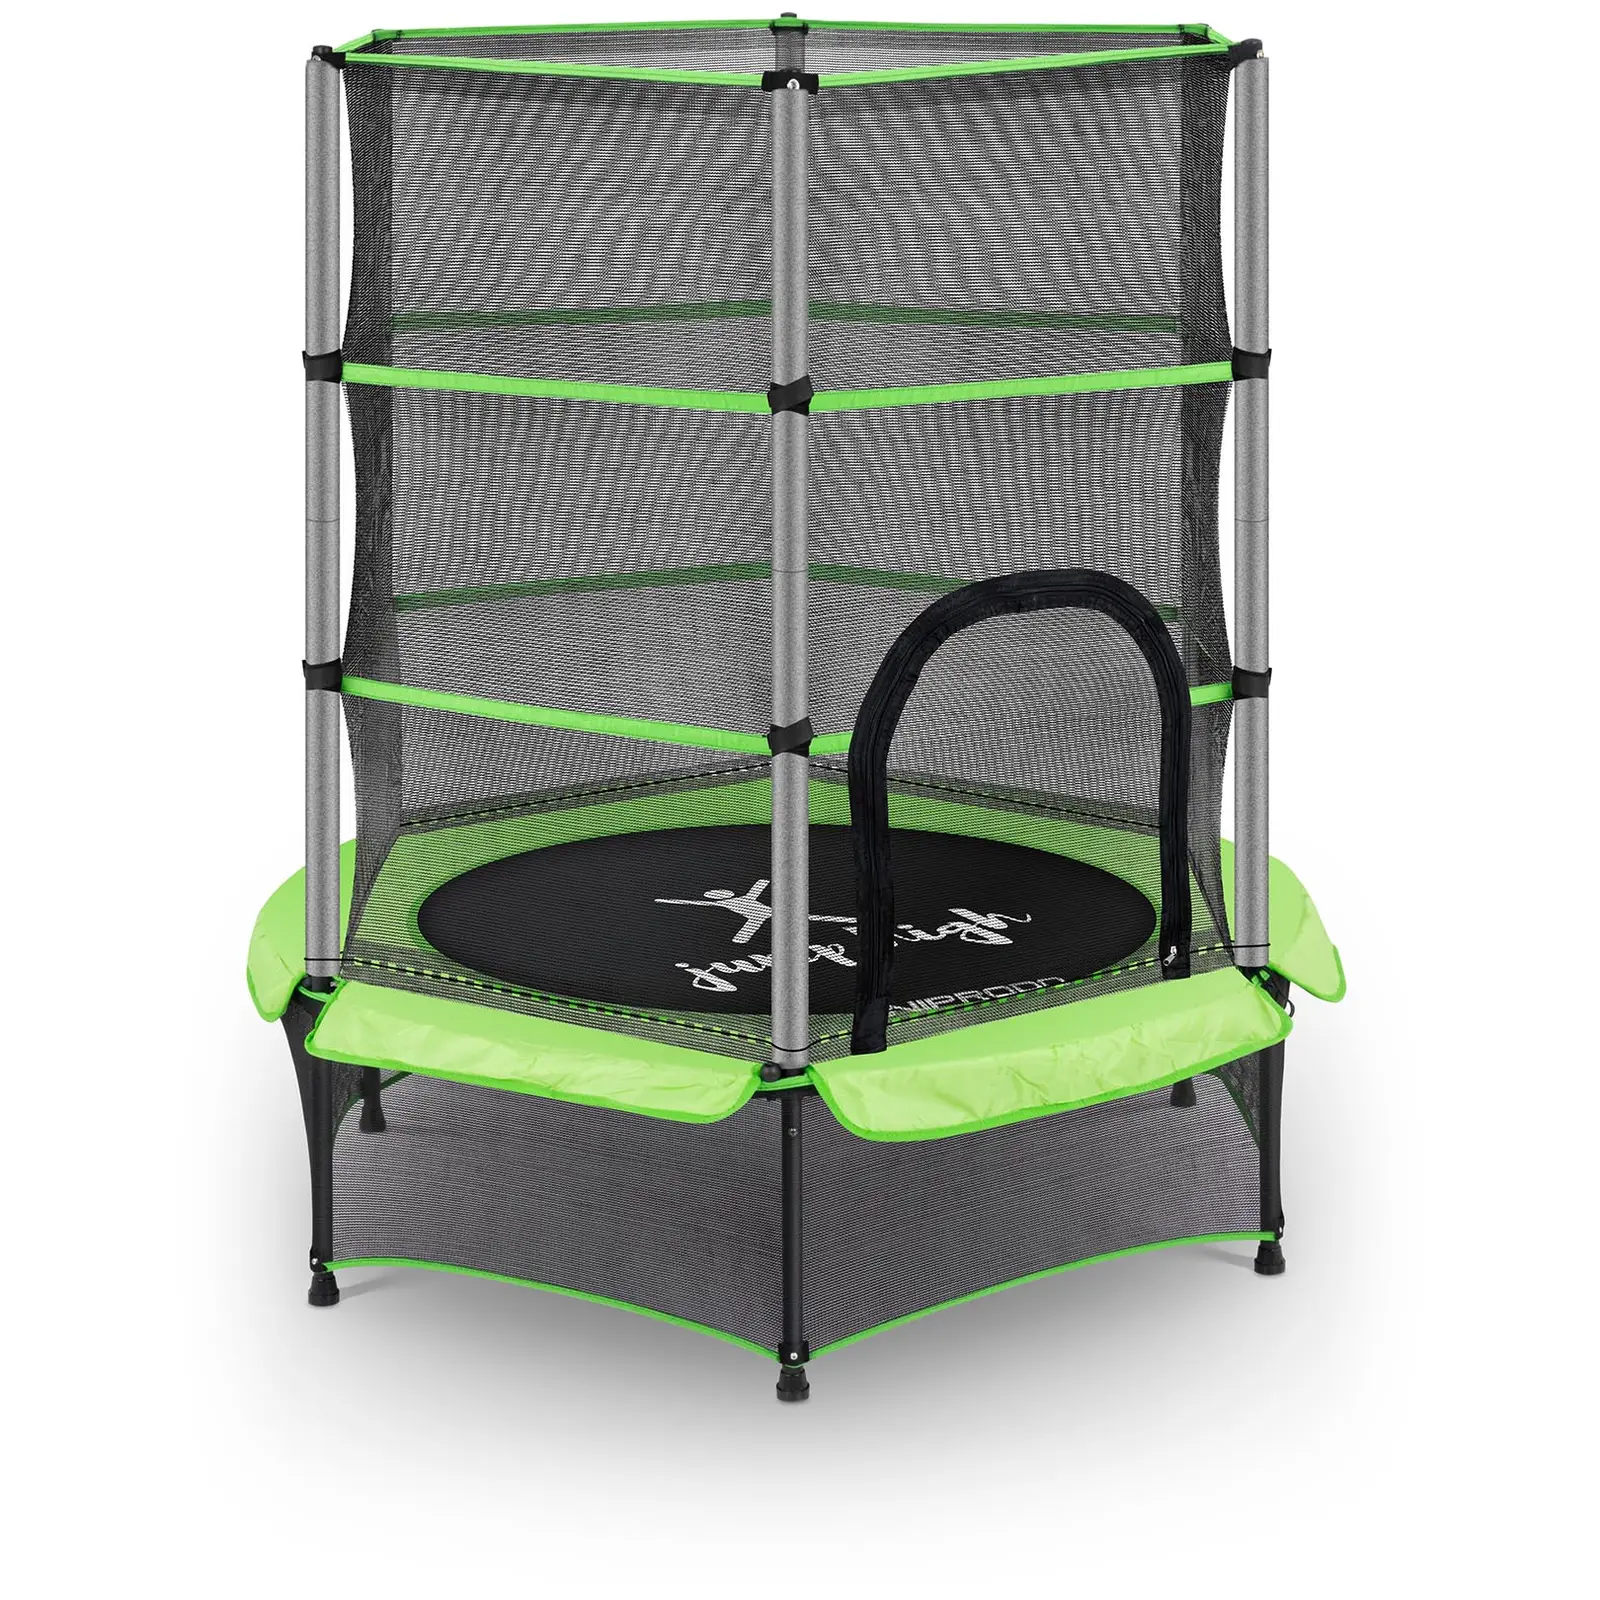 Kid's Trampoline - with safety net - 140 cm - 50 kg - green